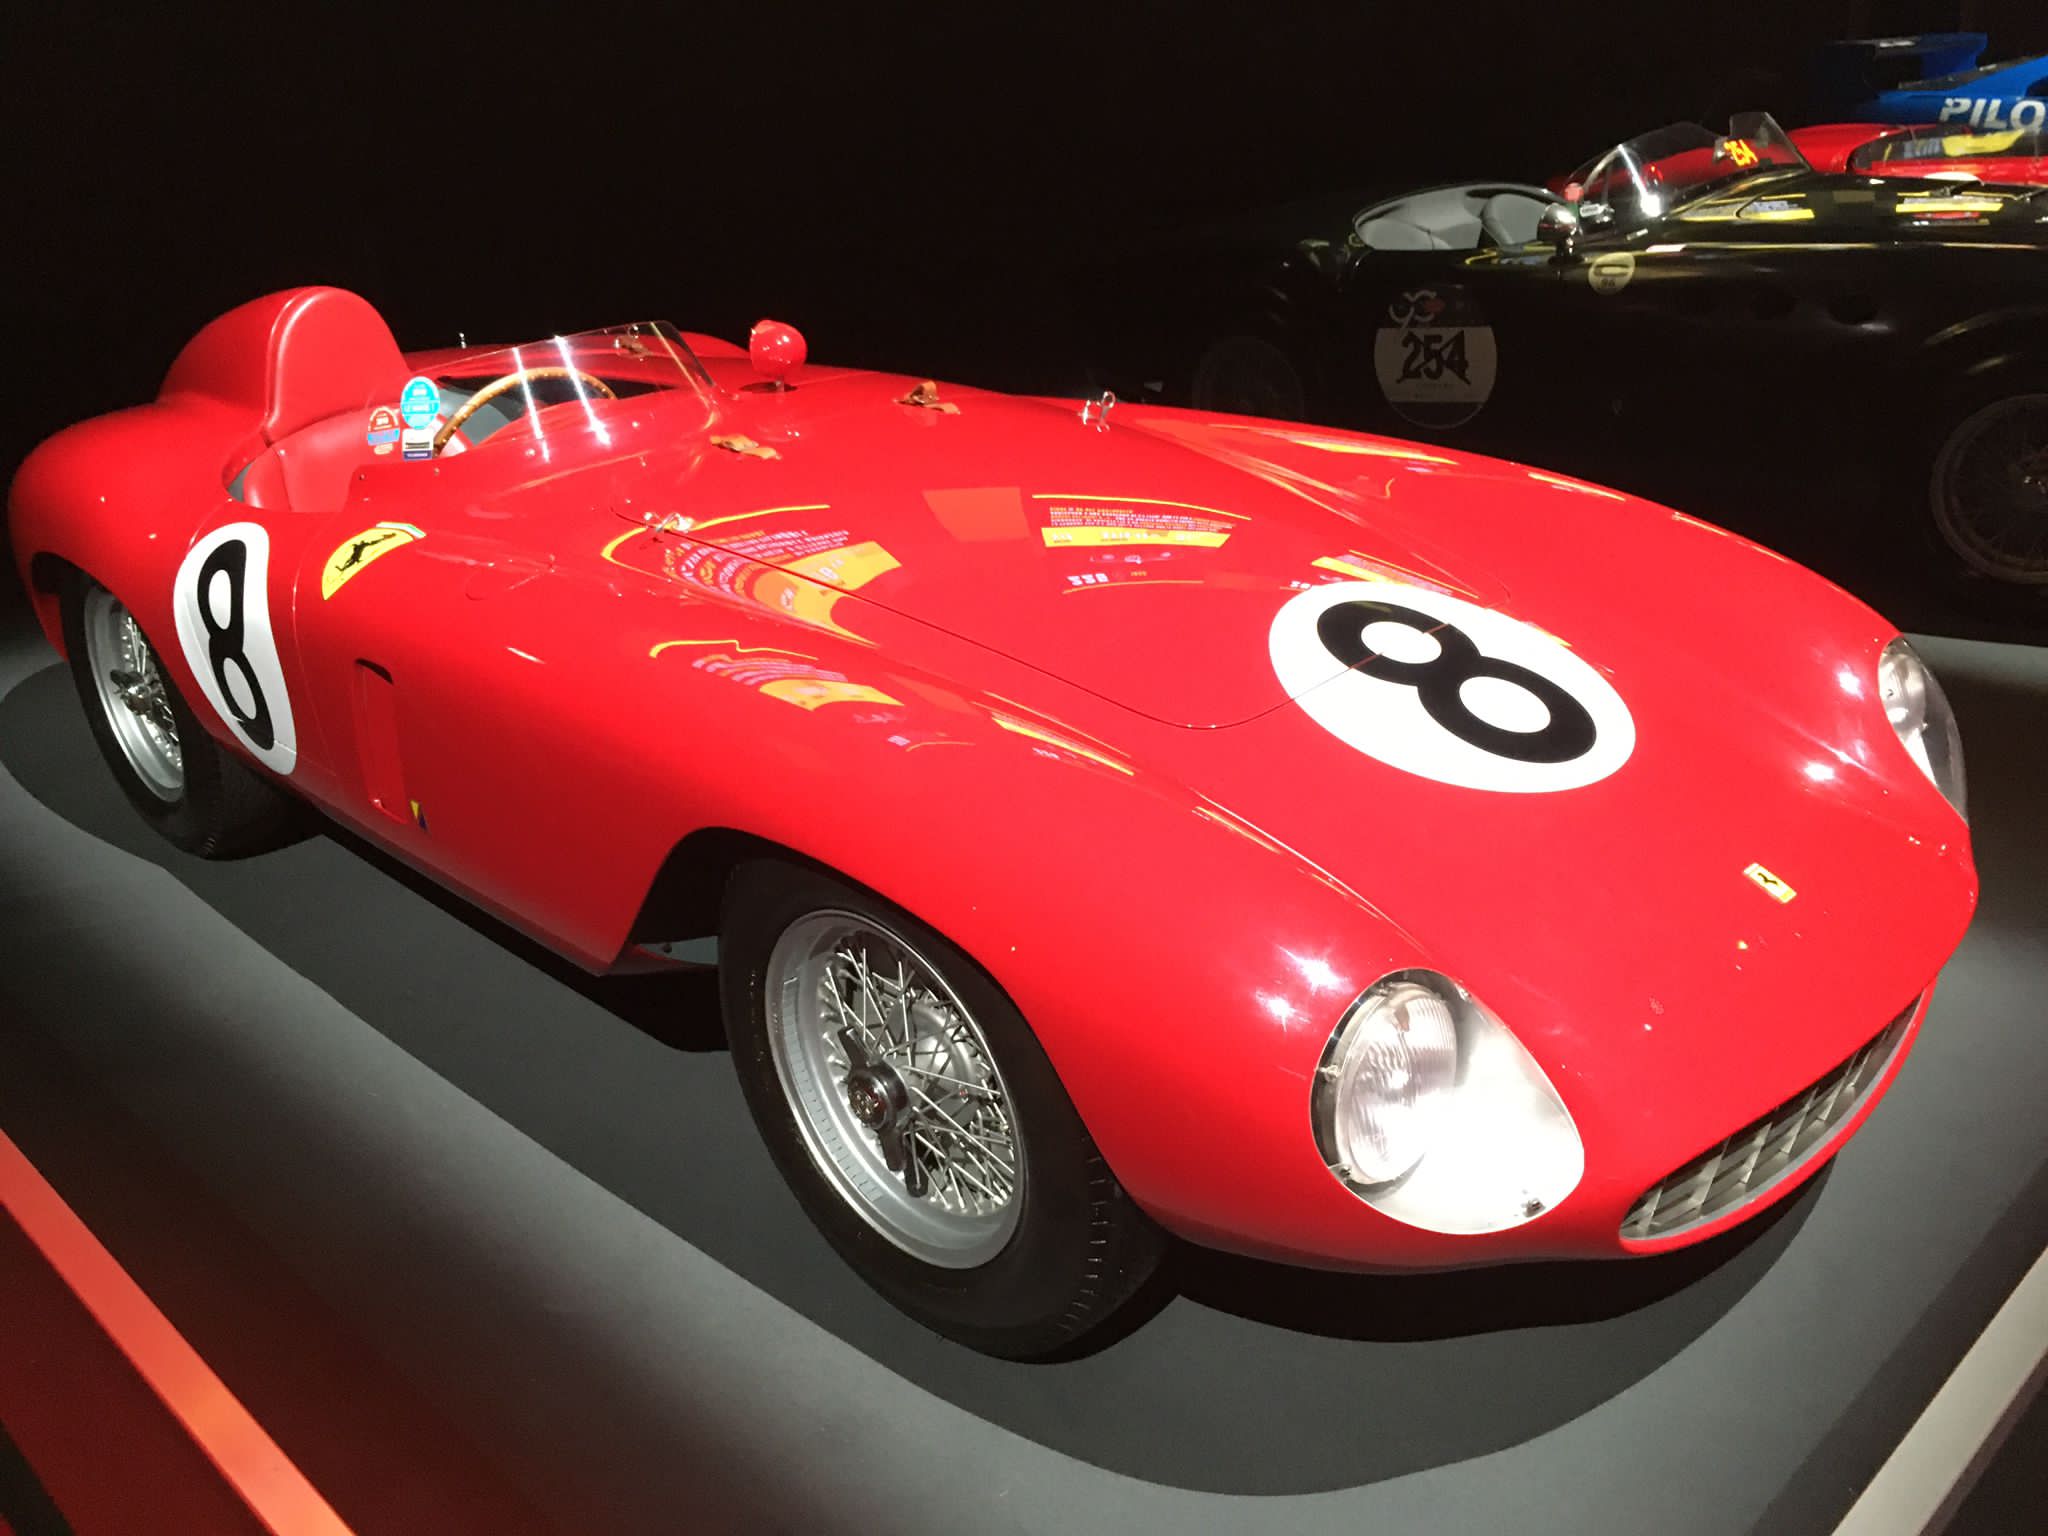 A red vintage Ferrari.